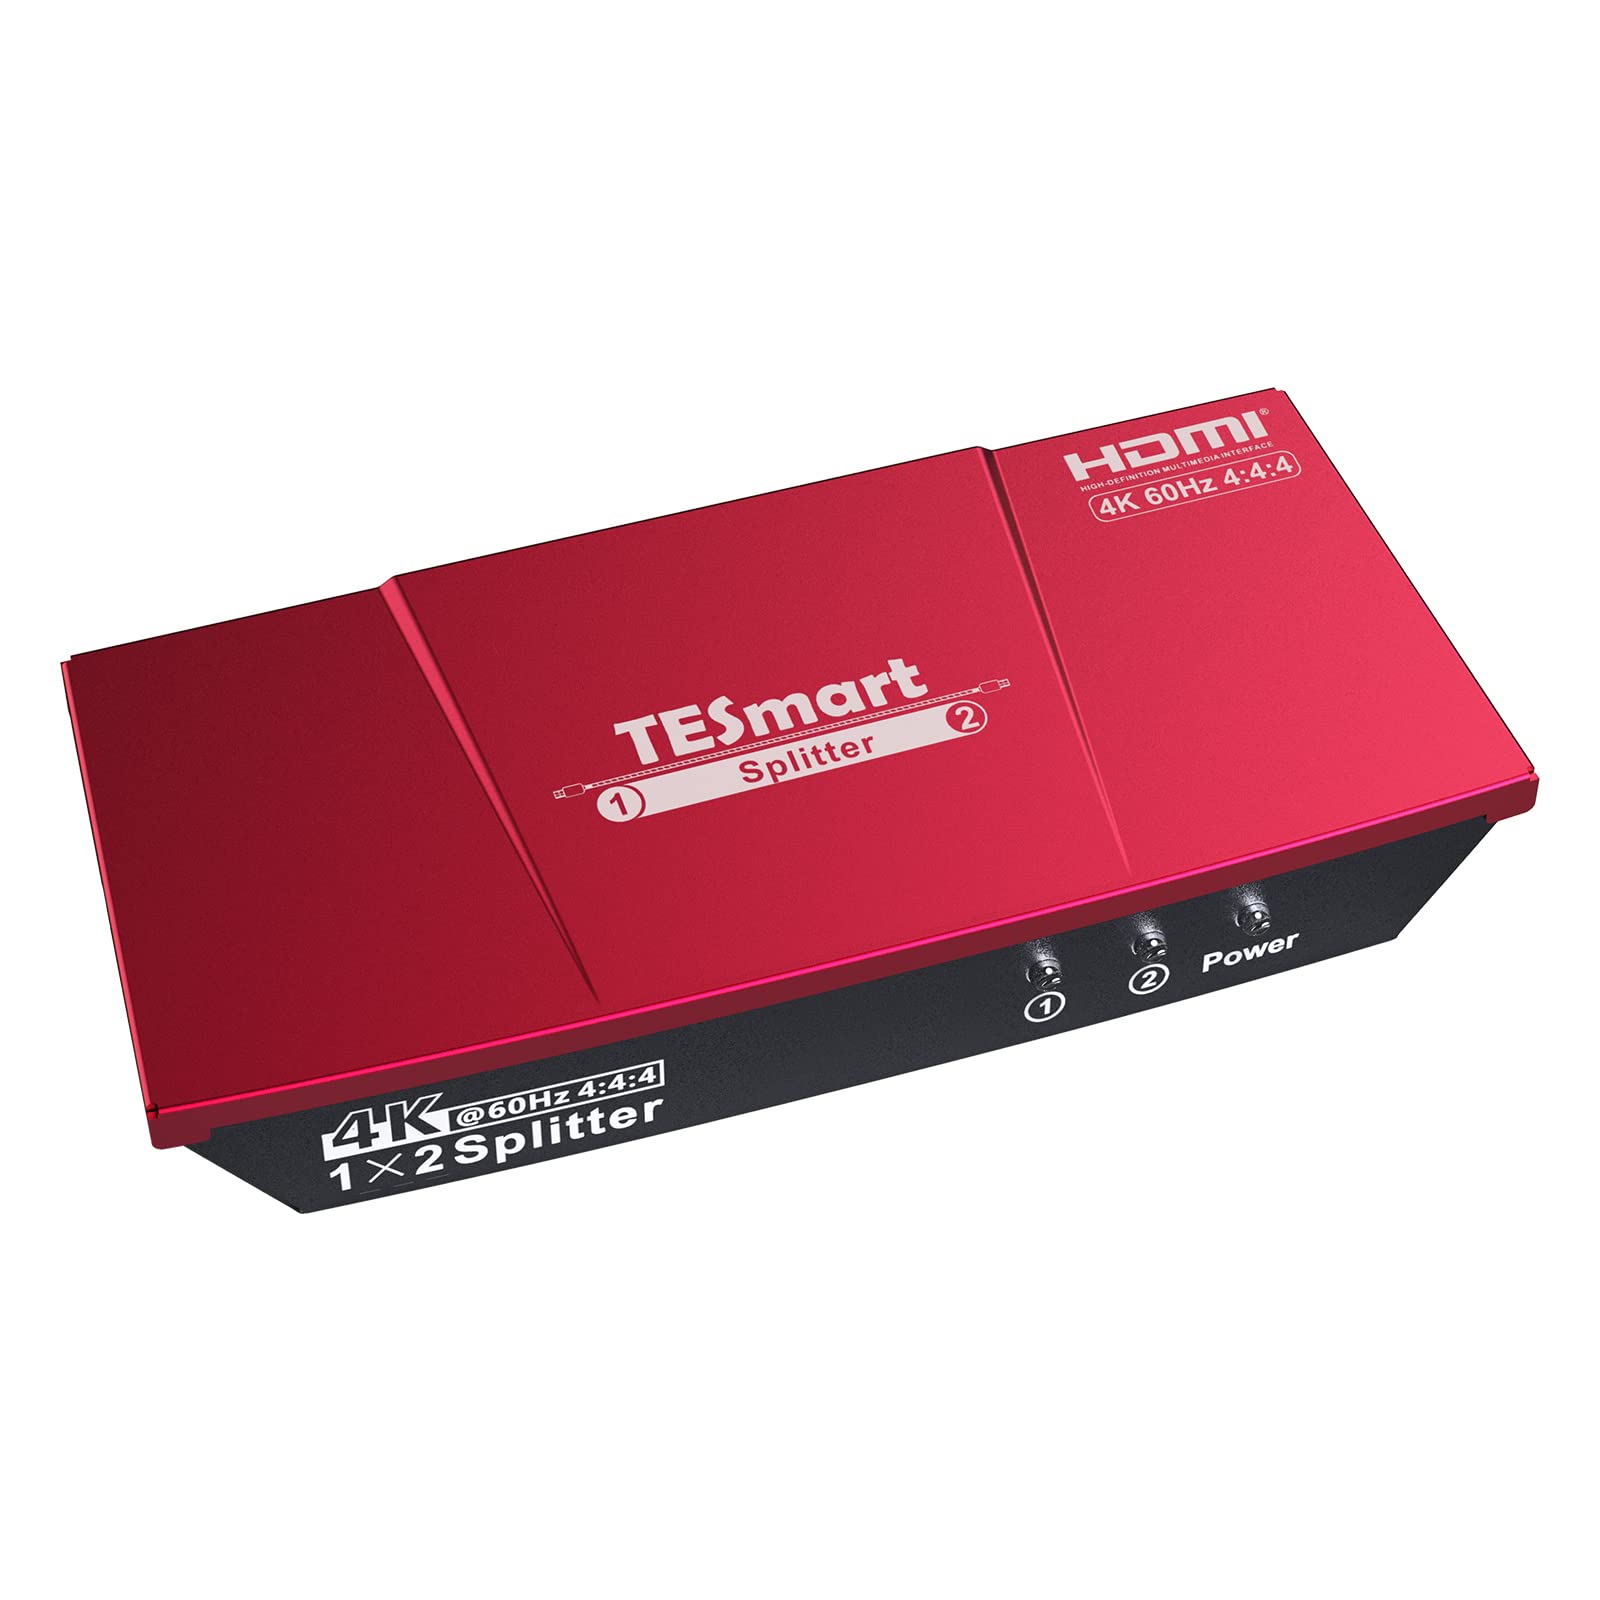 TESmart HSP0102A2U-EURD HDMI Splitter TESmart HDMI Splitter 1 in 2 Out, HDMI Splitter 4K @ 60Hz Supports HDCP 2.2 and CEC Function, Bi-Directional HDMI Splitter Flexible Control 7 EDID Modes Compatible with Laptop PS4 Xbox Sky Box Red 2 Ports&CEC / Red / EU Plug